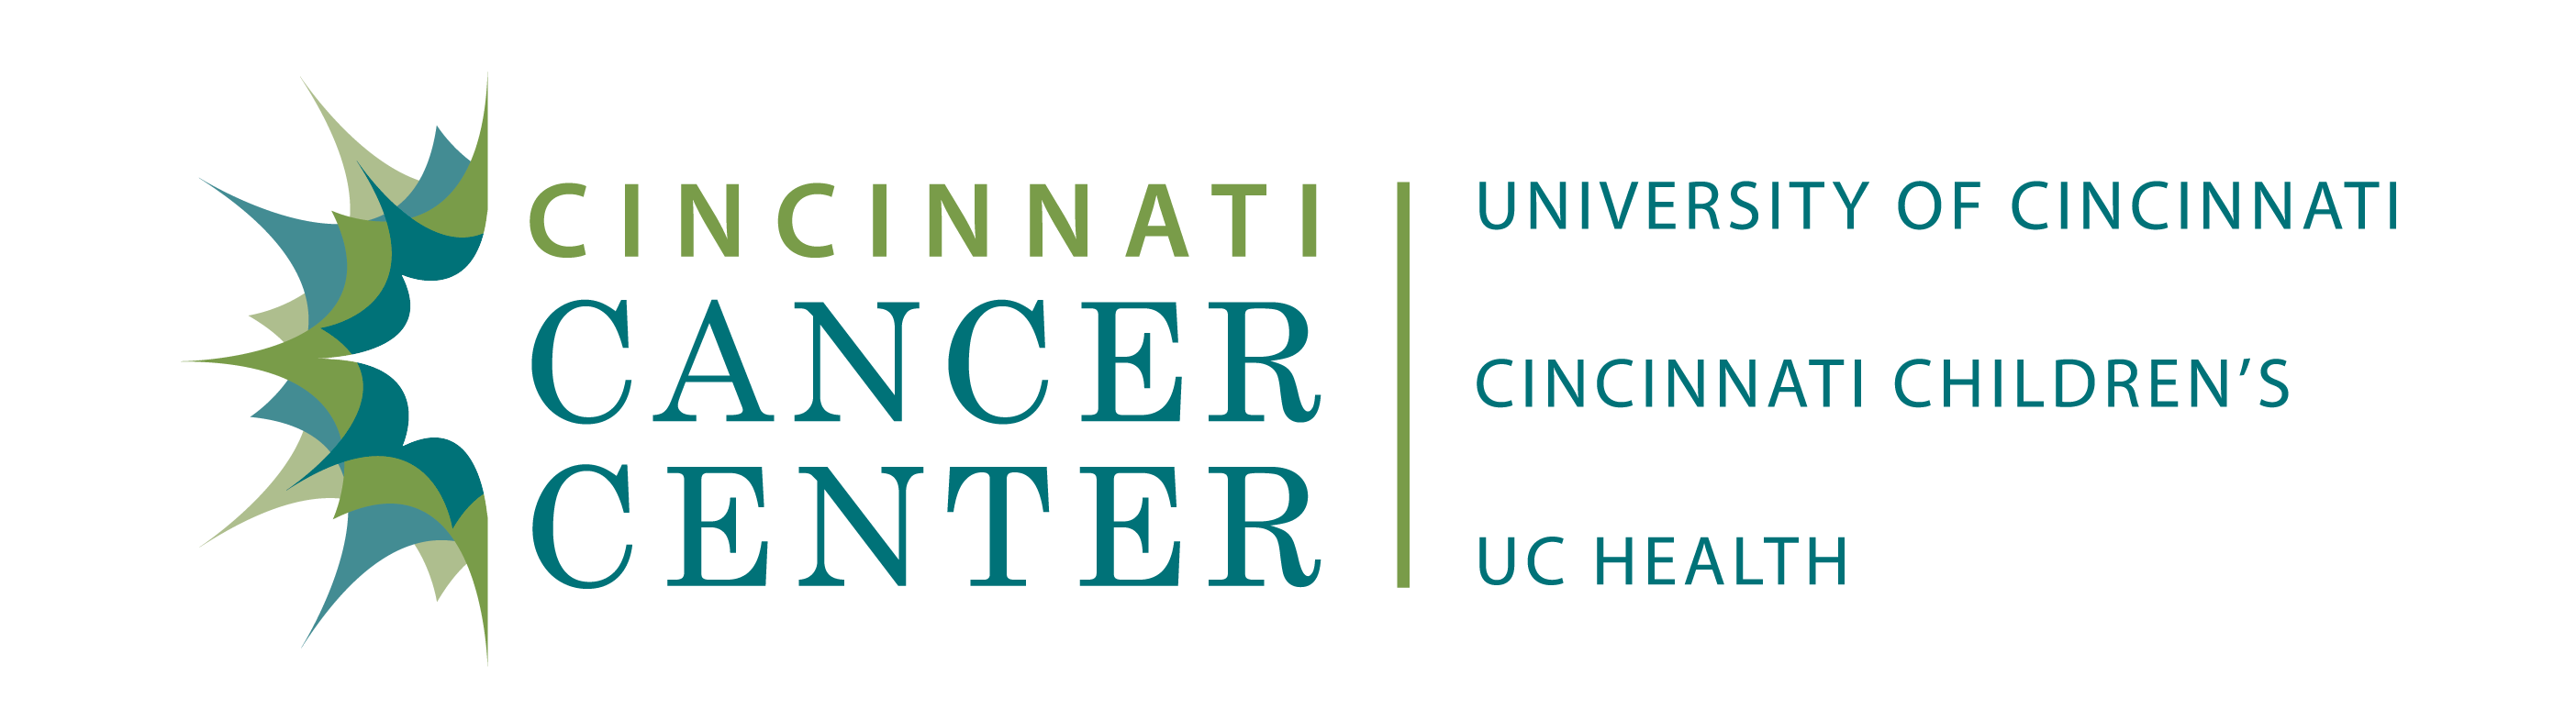 Cincinnati Cancer Center logo